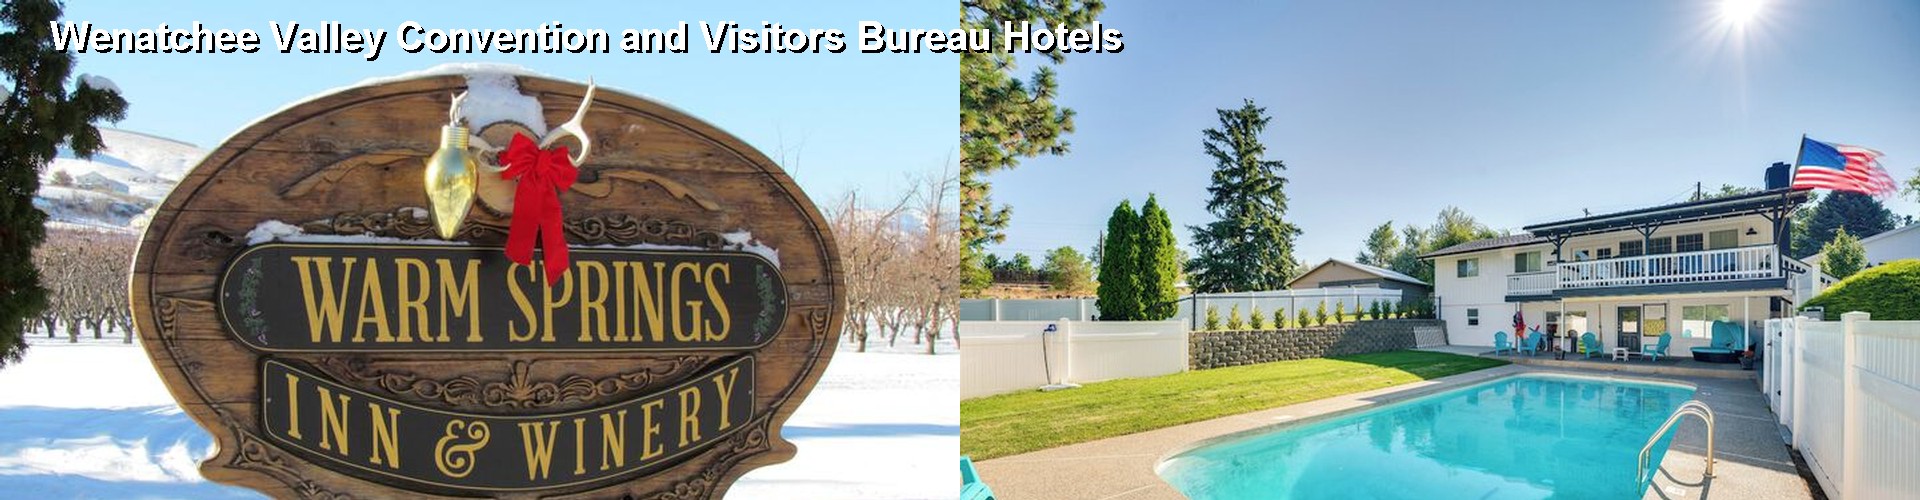 5 Best Hotels near Wenatchee Valley Convention and Visitors Bureau